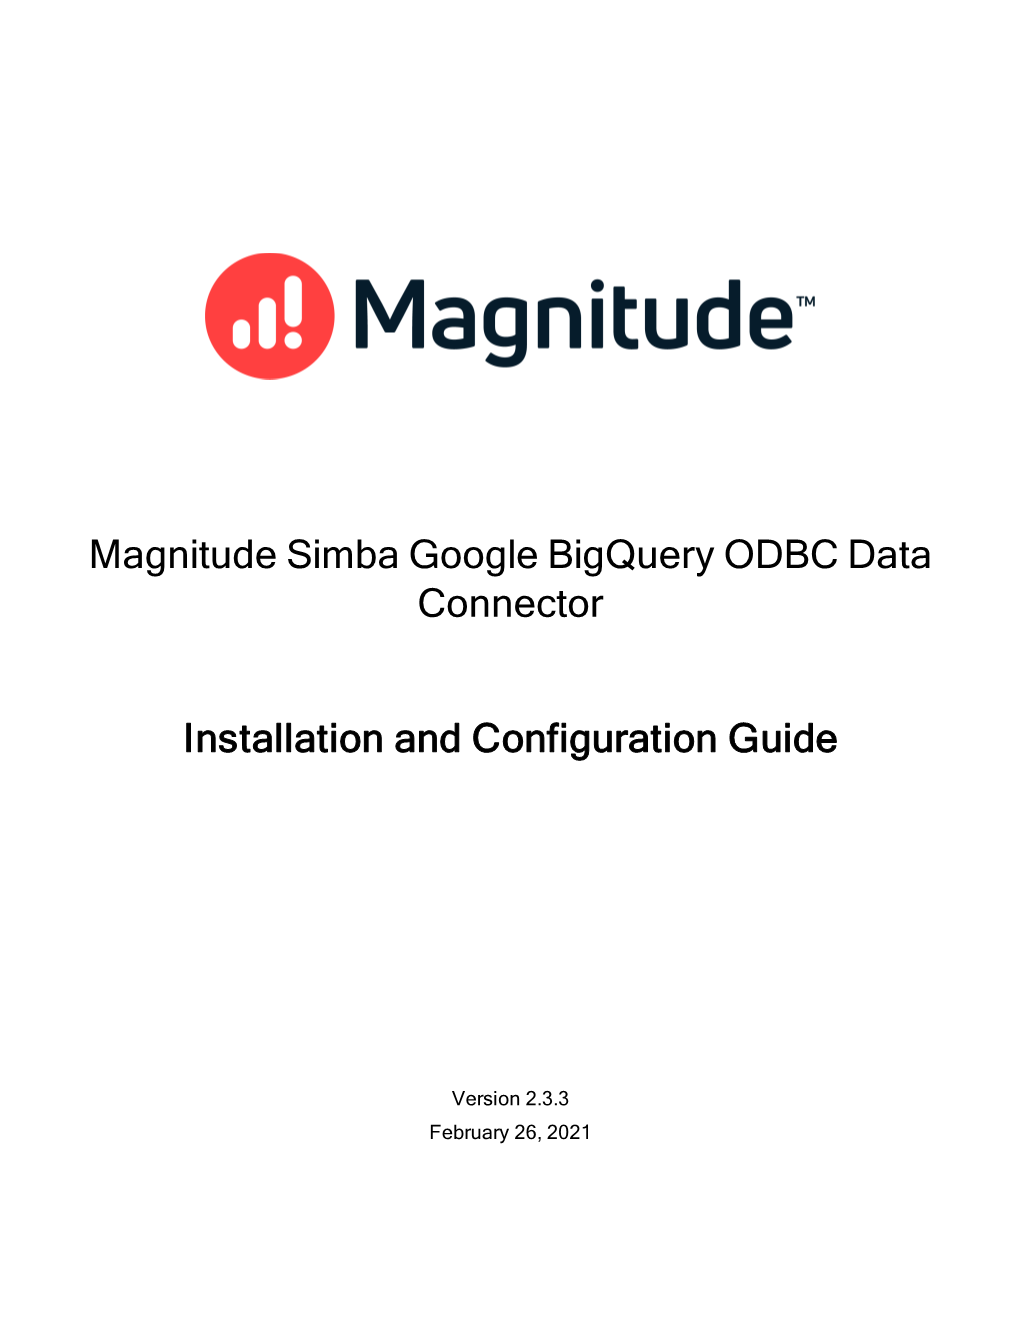 Magnitude Simba Google Bigquery ODBC Data Connector Installation